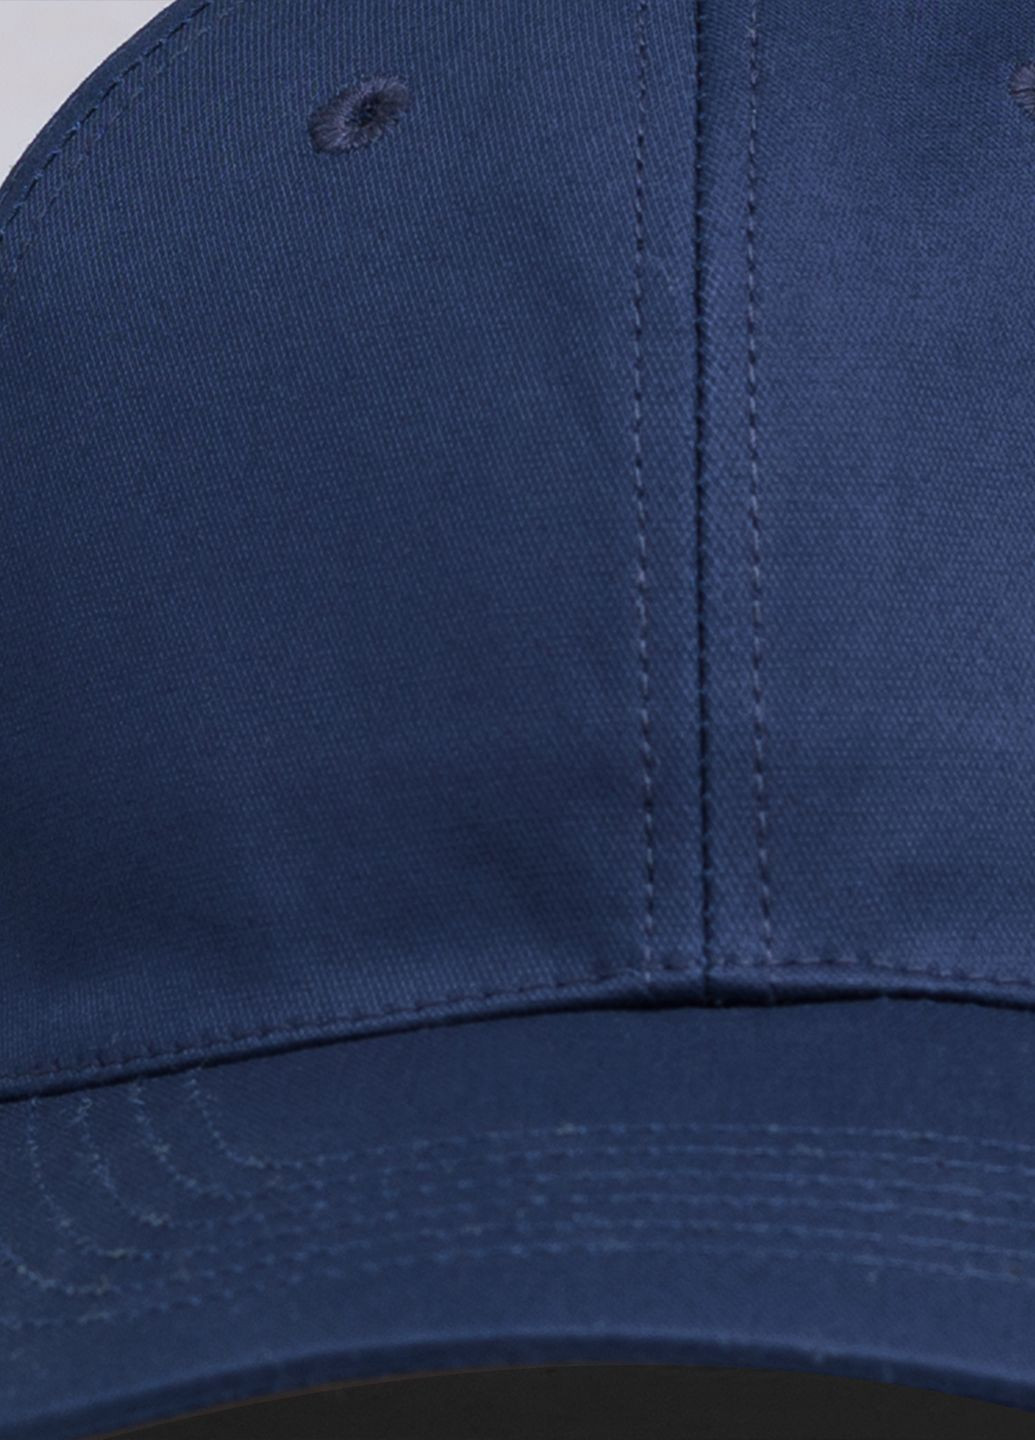 Кепка мужская синяя Arber кепка 2 (285766031)